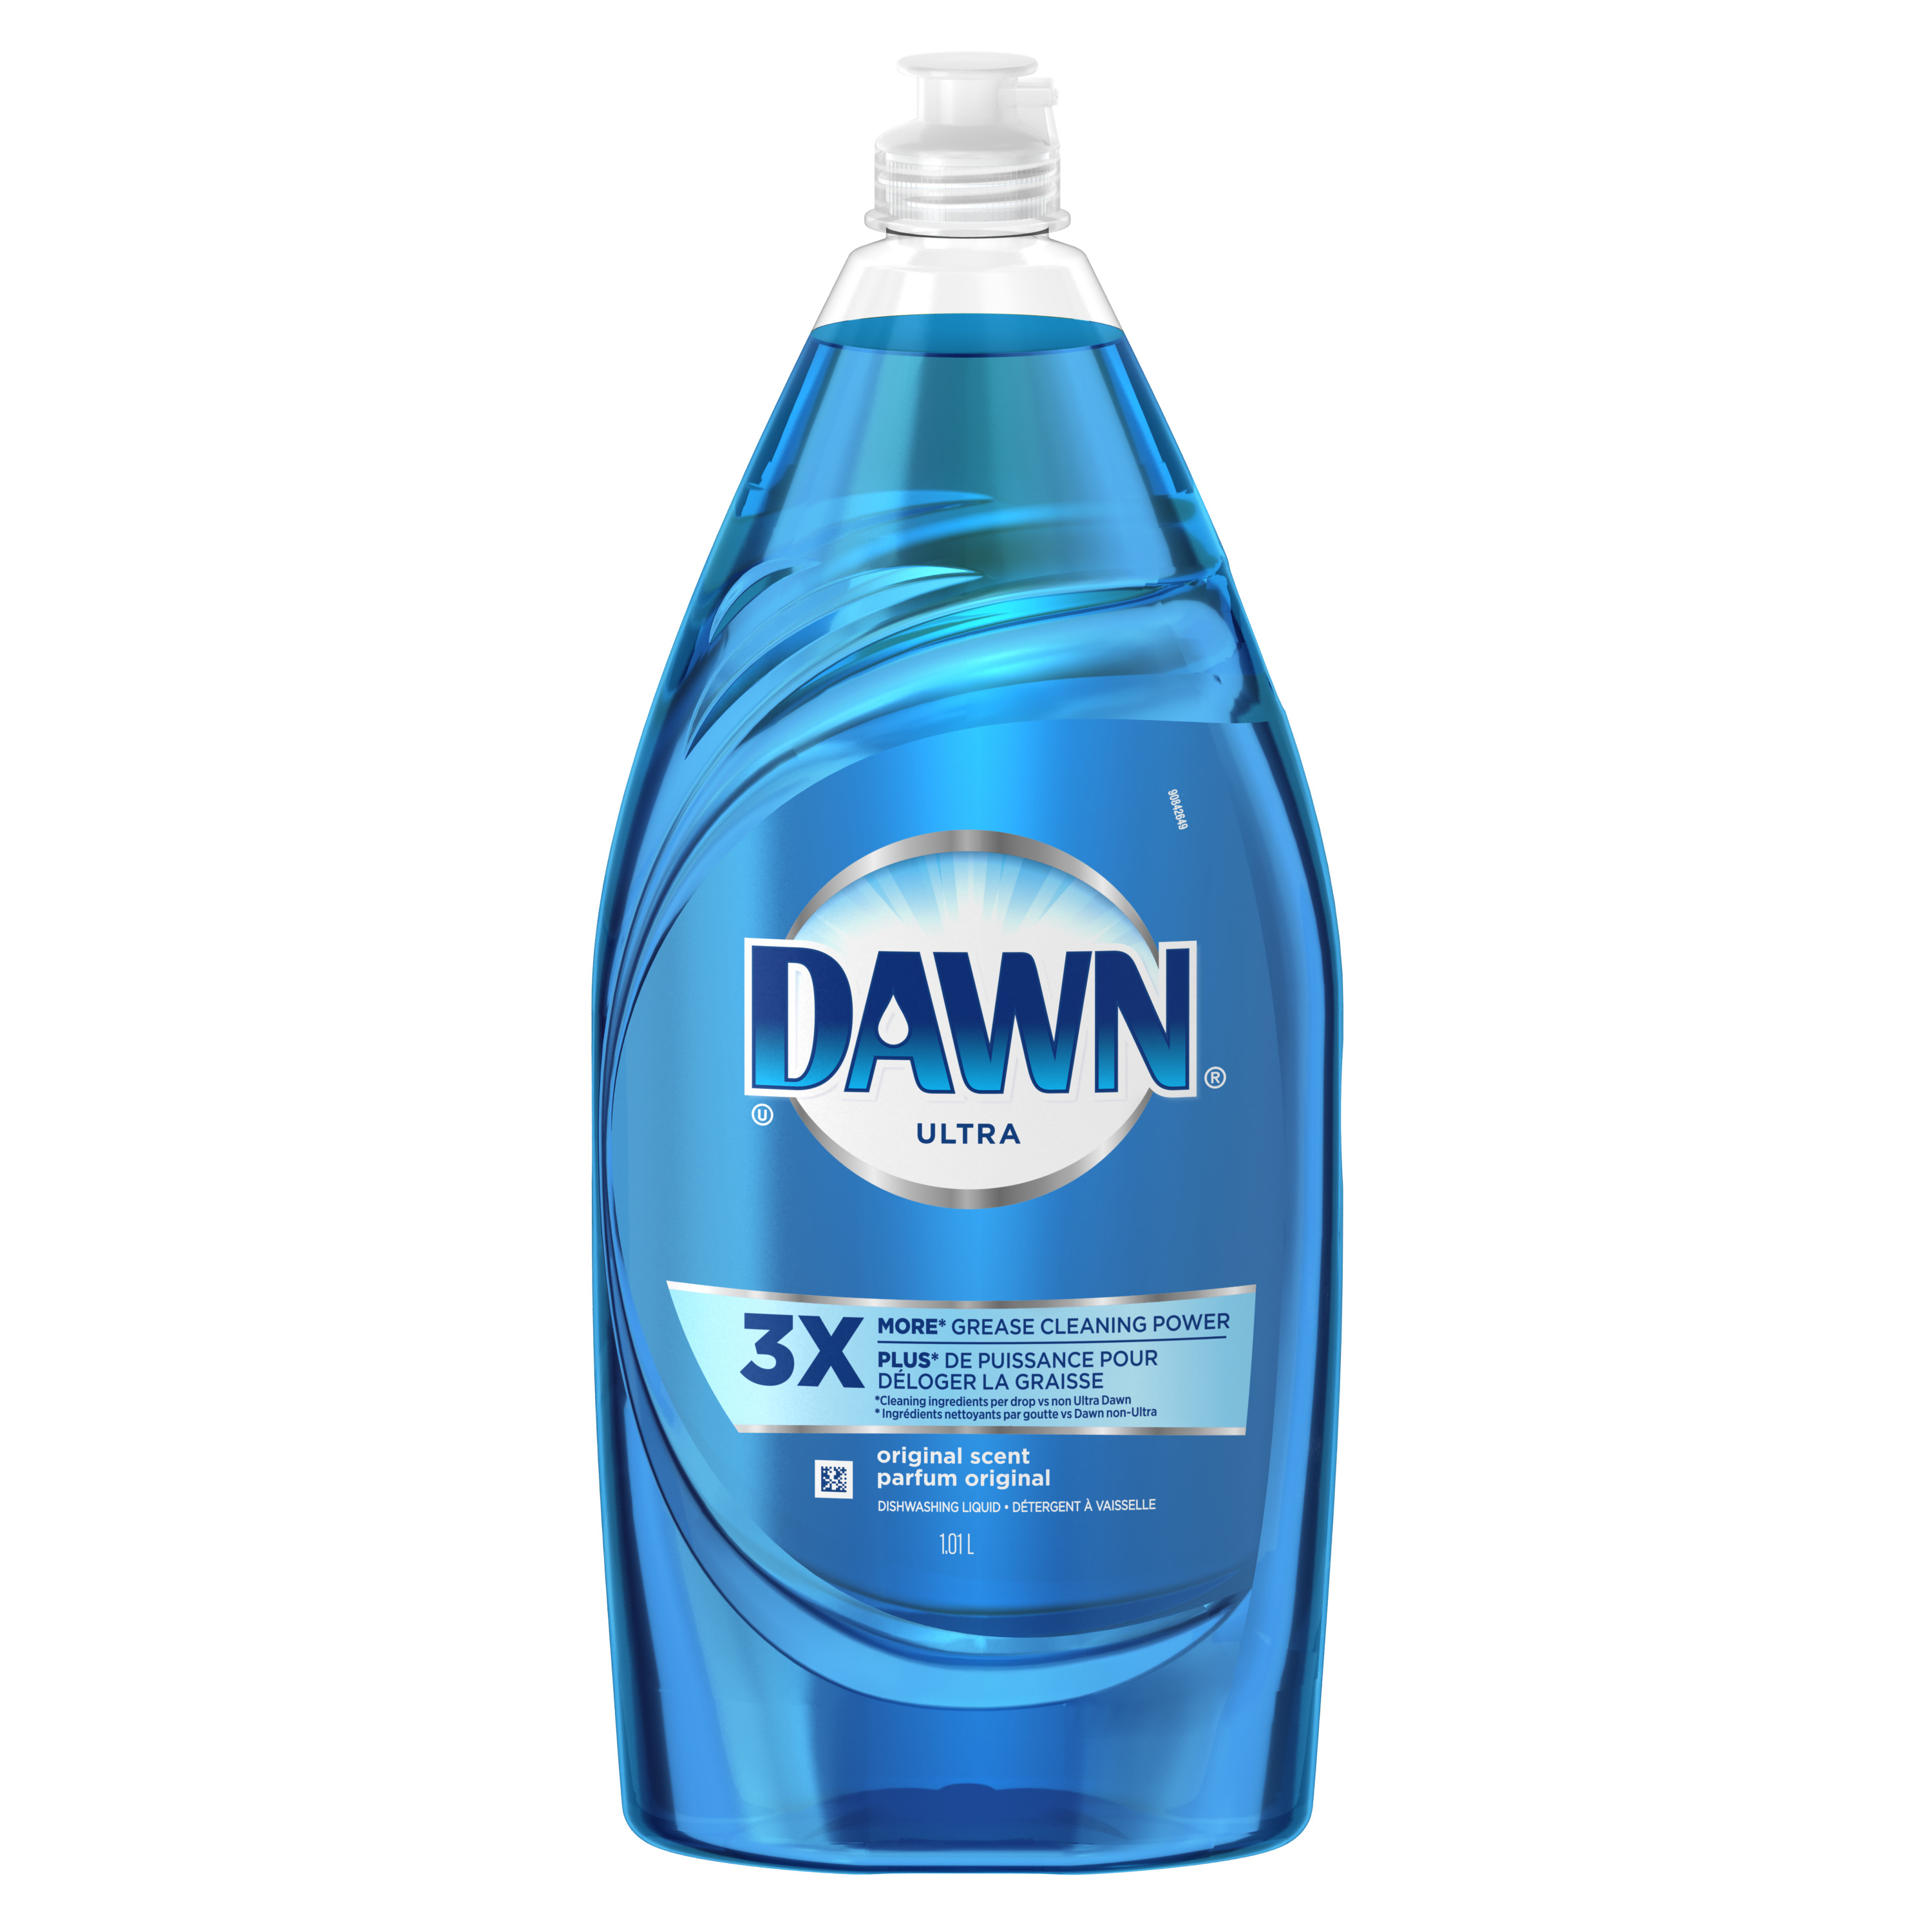 Dawn Ultra Dishwashing Liquid Dish Soap, Original Scent, 1.01 L - image 5 of 7